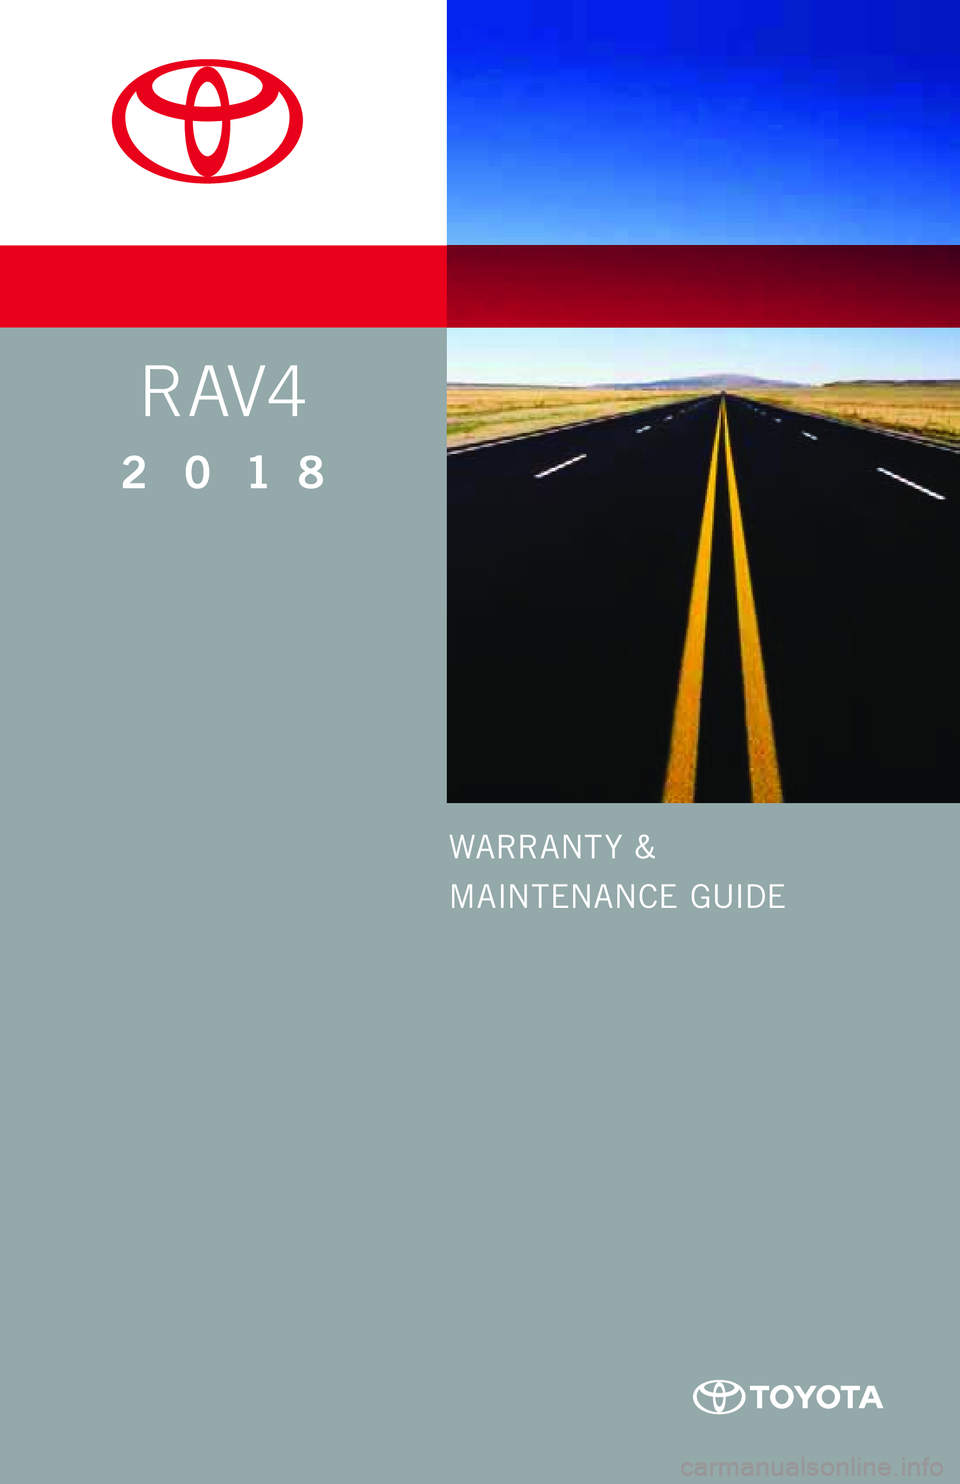 TOYOTA RAV4 2018  Warranties & Maintenance Guides (in English) WARRANT Y & 
MAINTENANCE GUIDE
RAV4
2018      